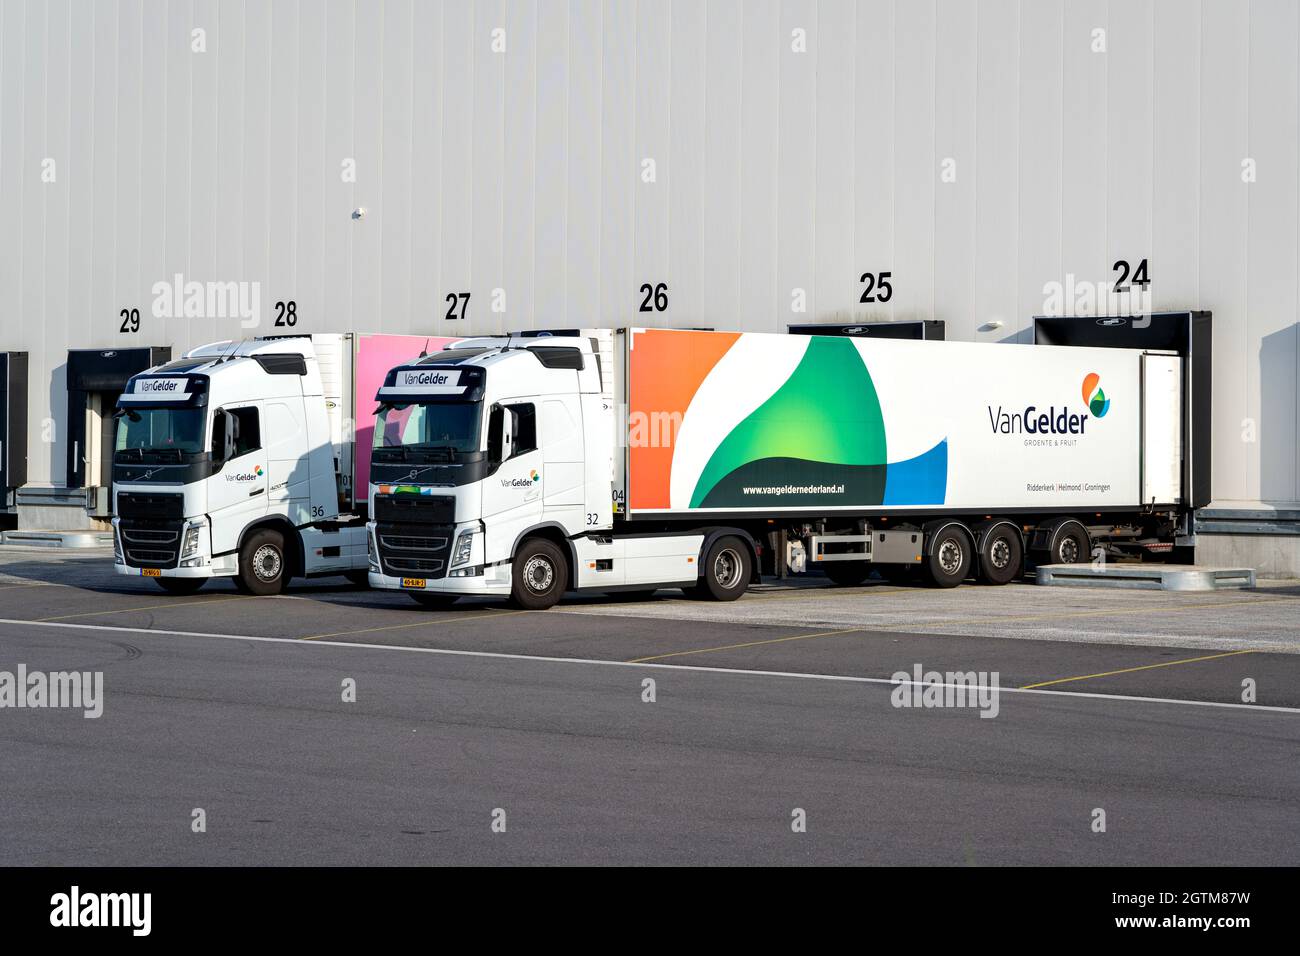 Van Gelder trucks at loading dock Stock Photo